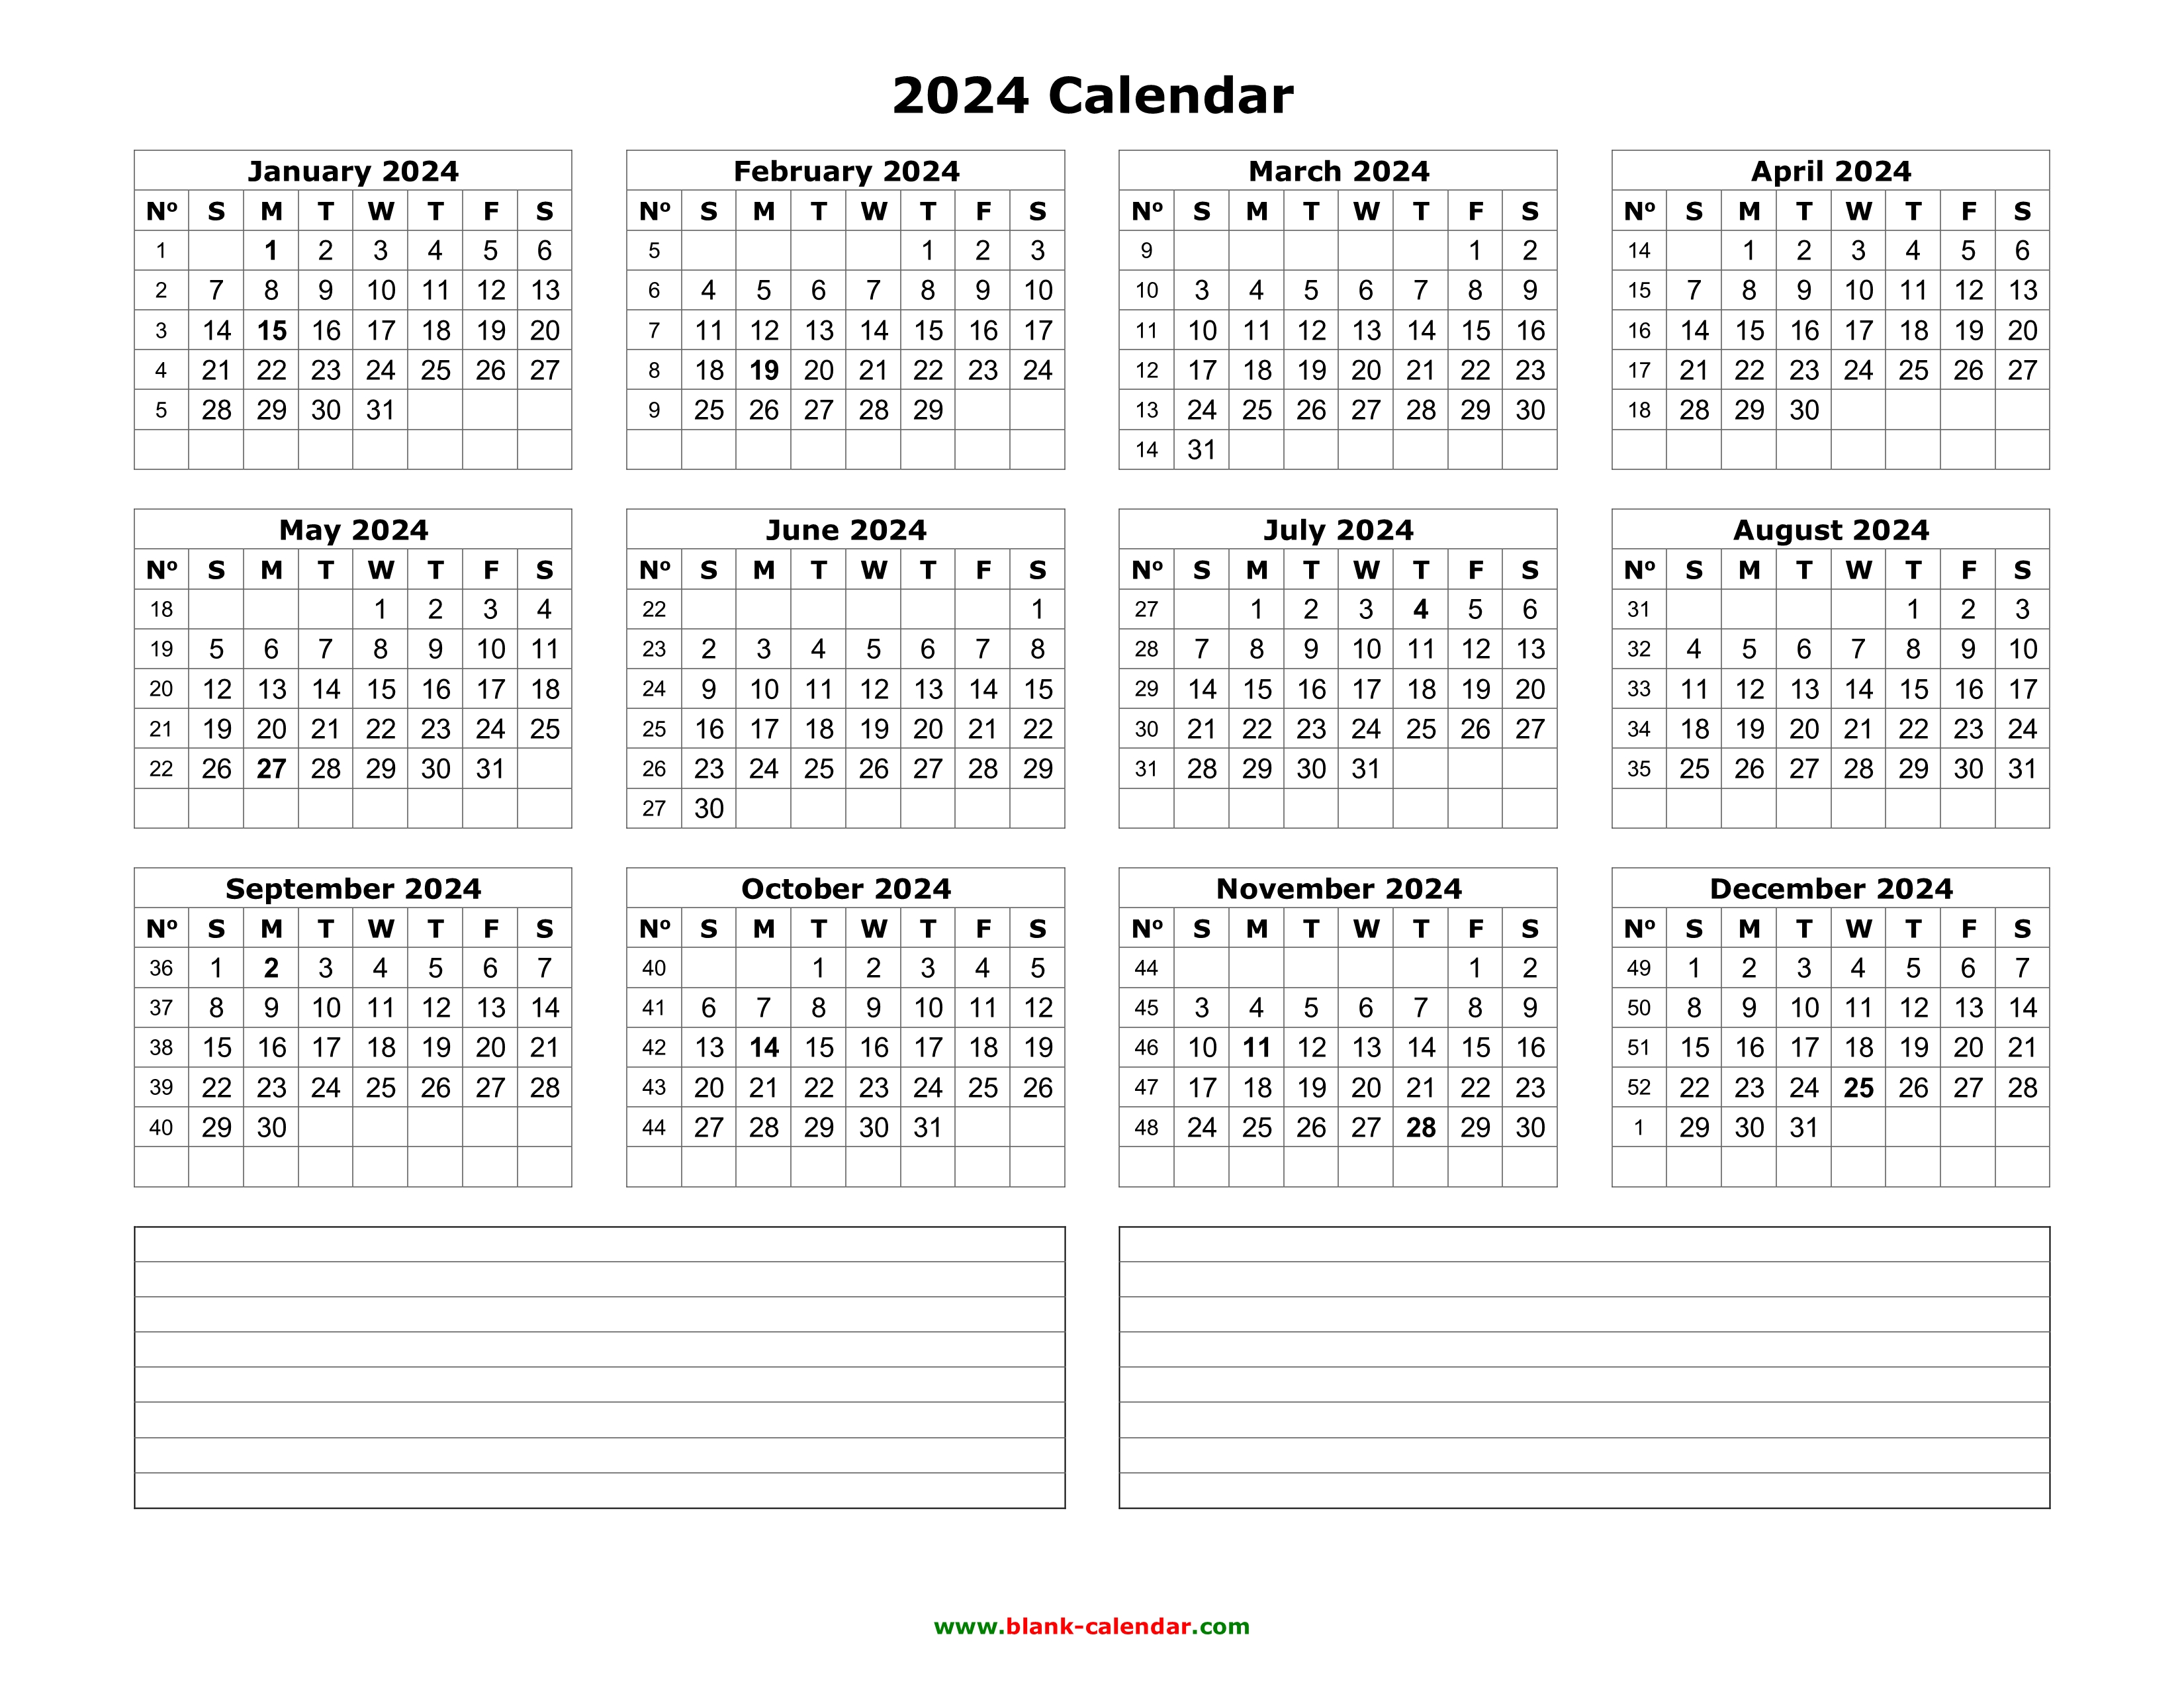 2024-calendar-templates-and-images-2024-calendar-pdf-word-excel